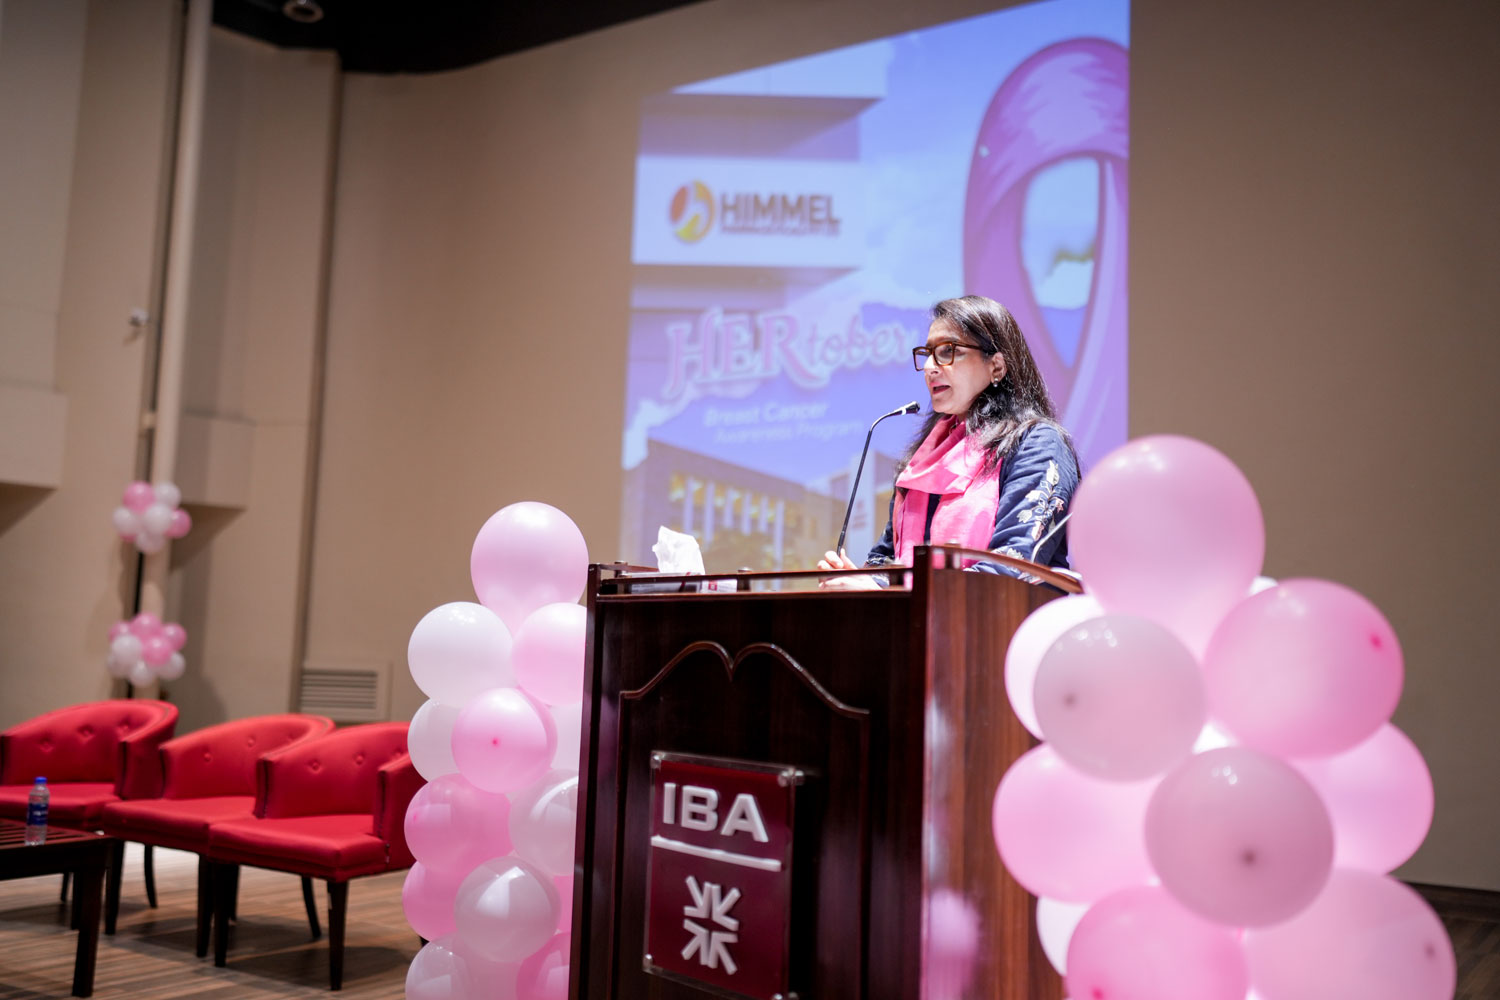 IBA Karachi partners with Himmel Pharma for Breast Cancer Awareness Program